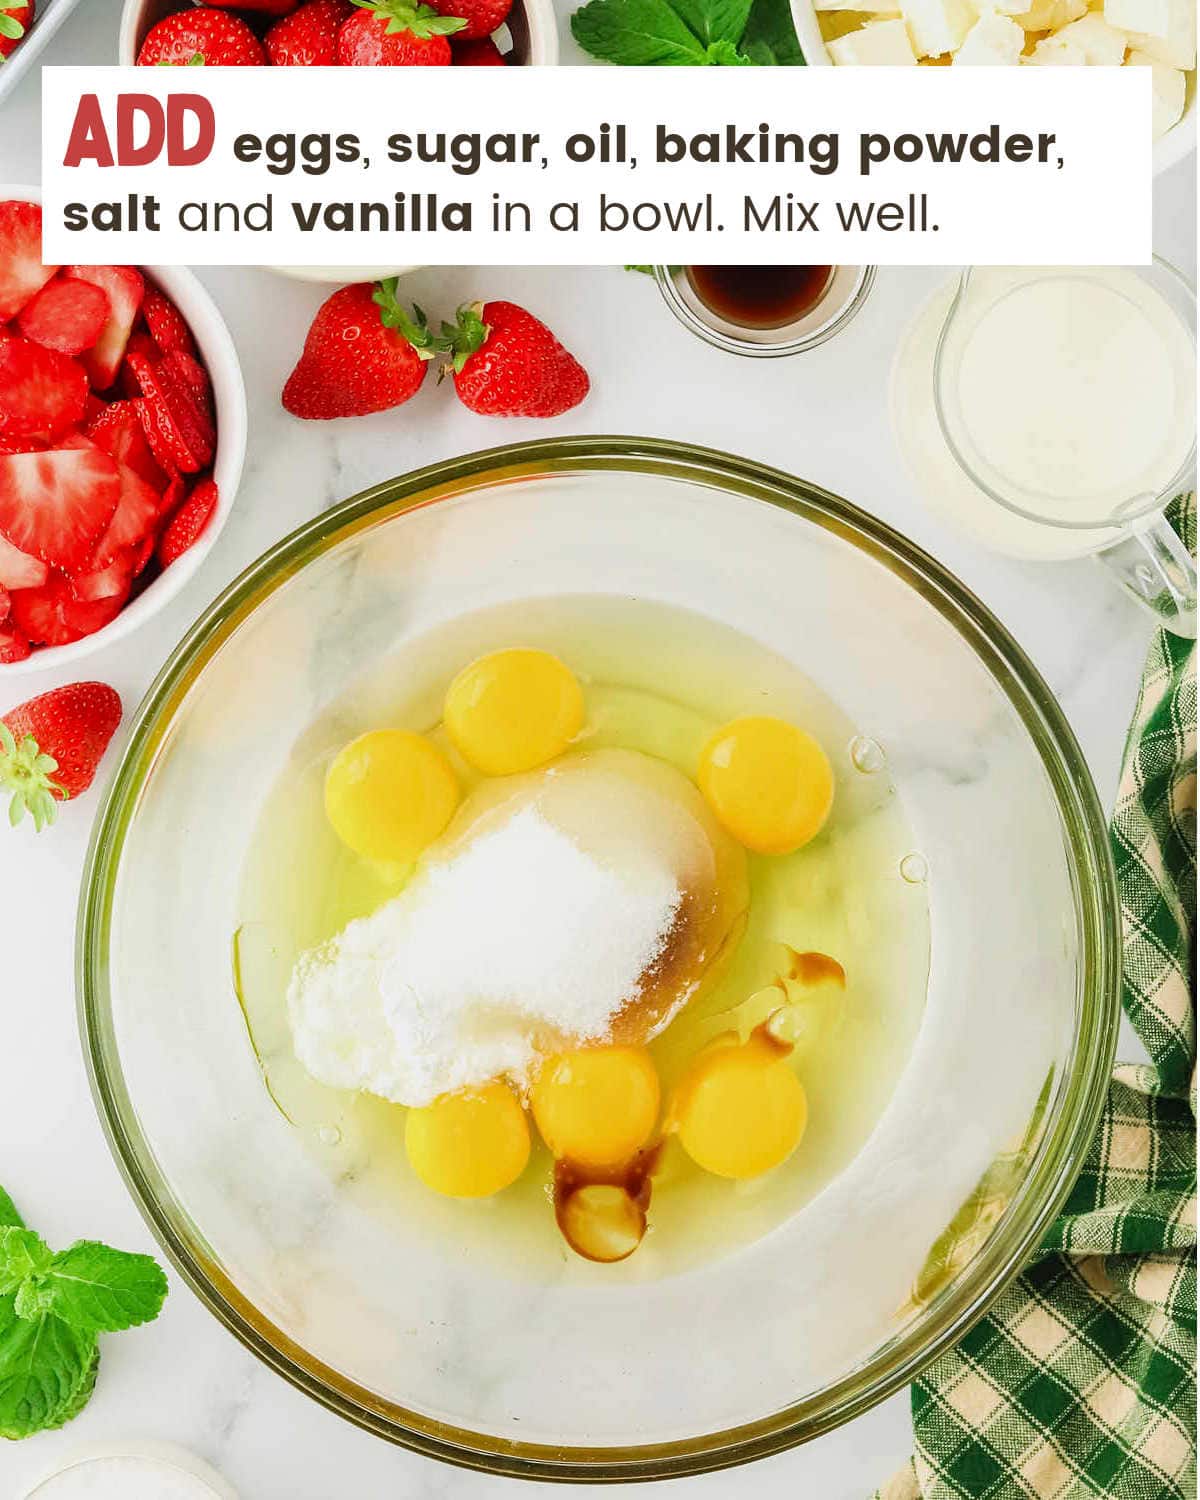 Add eggs, oil, baking powder, salt and vanilla in a bowl for a Strawberry Shortcake Roll.